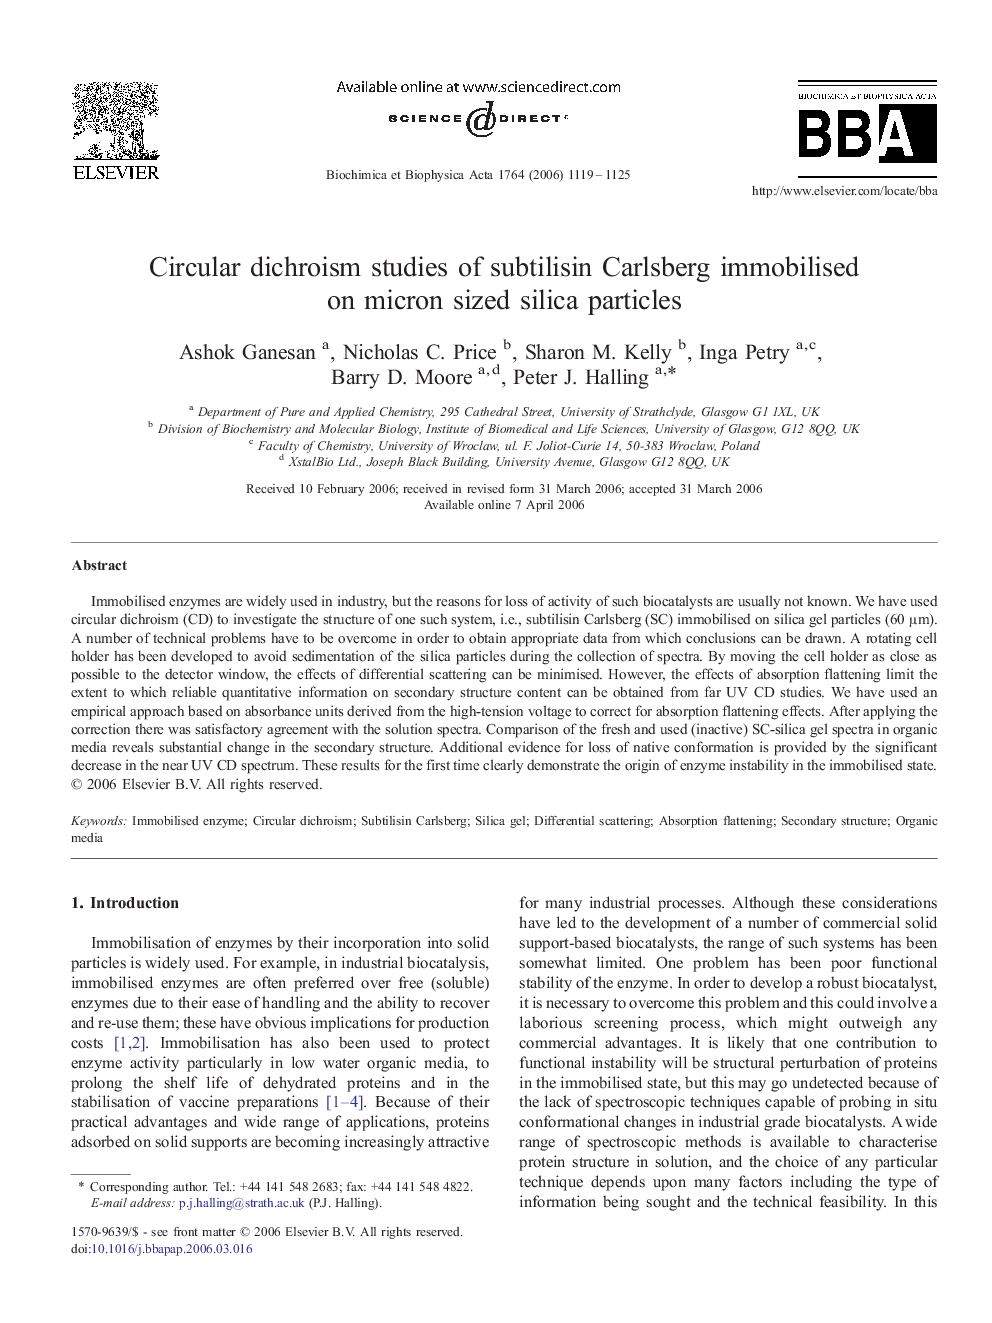 Circular dichroism studies of subtilisin Carlsberg immobilised on micron sized silica particles